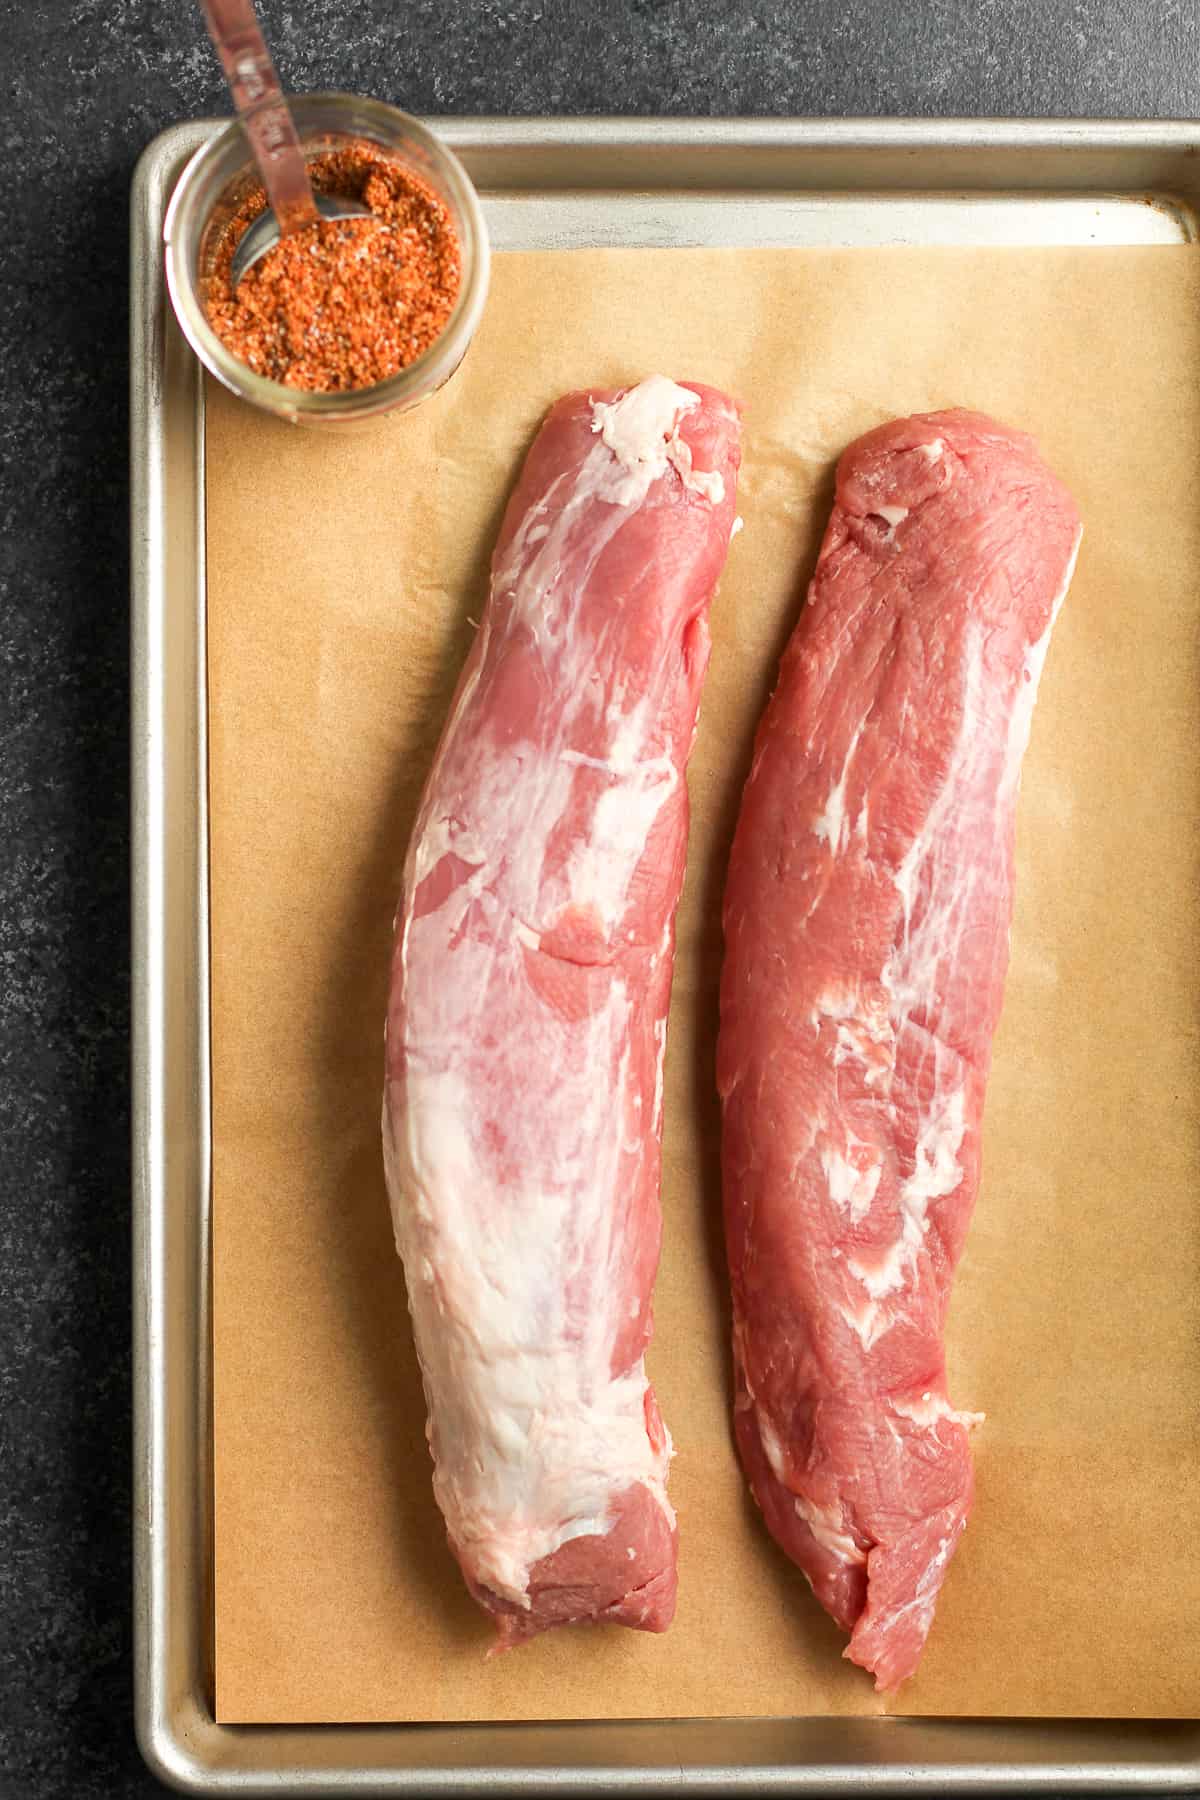 Two raw pork tenderloins on a baking sheet, with a jar of seasoning.